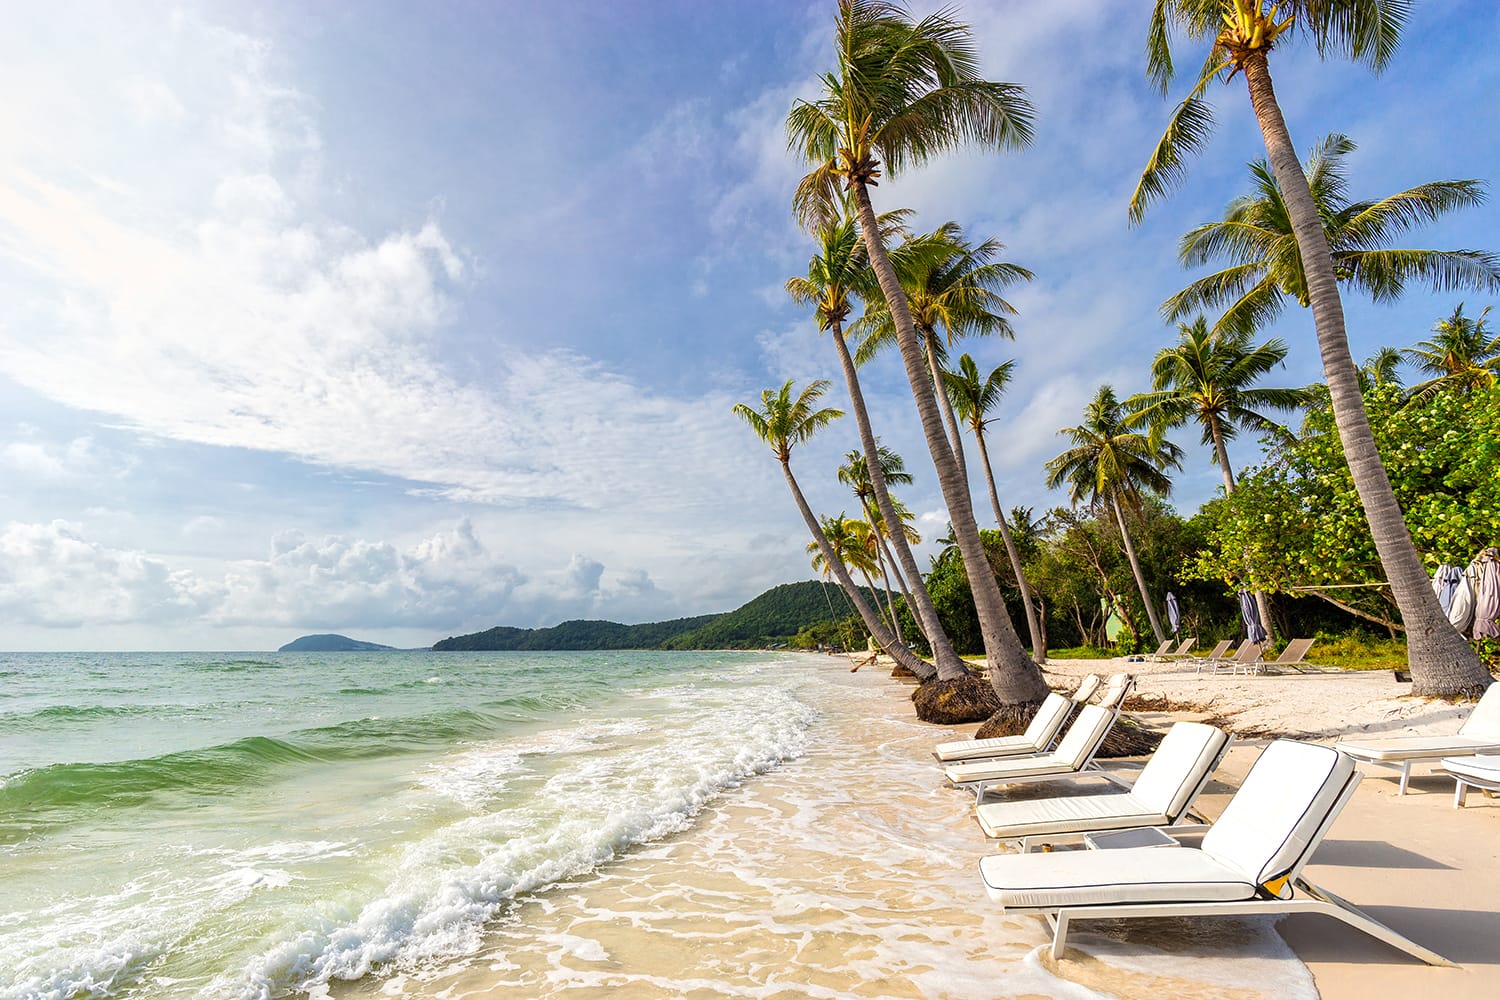 Sunbeds under tropical palms on beautiful Bai Sao beach in Vietnam on Phu Quoc island